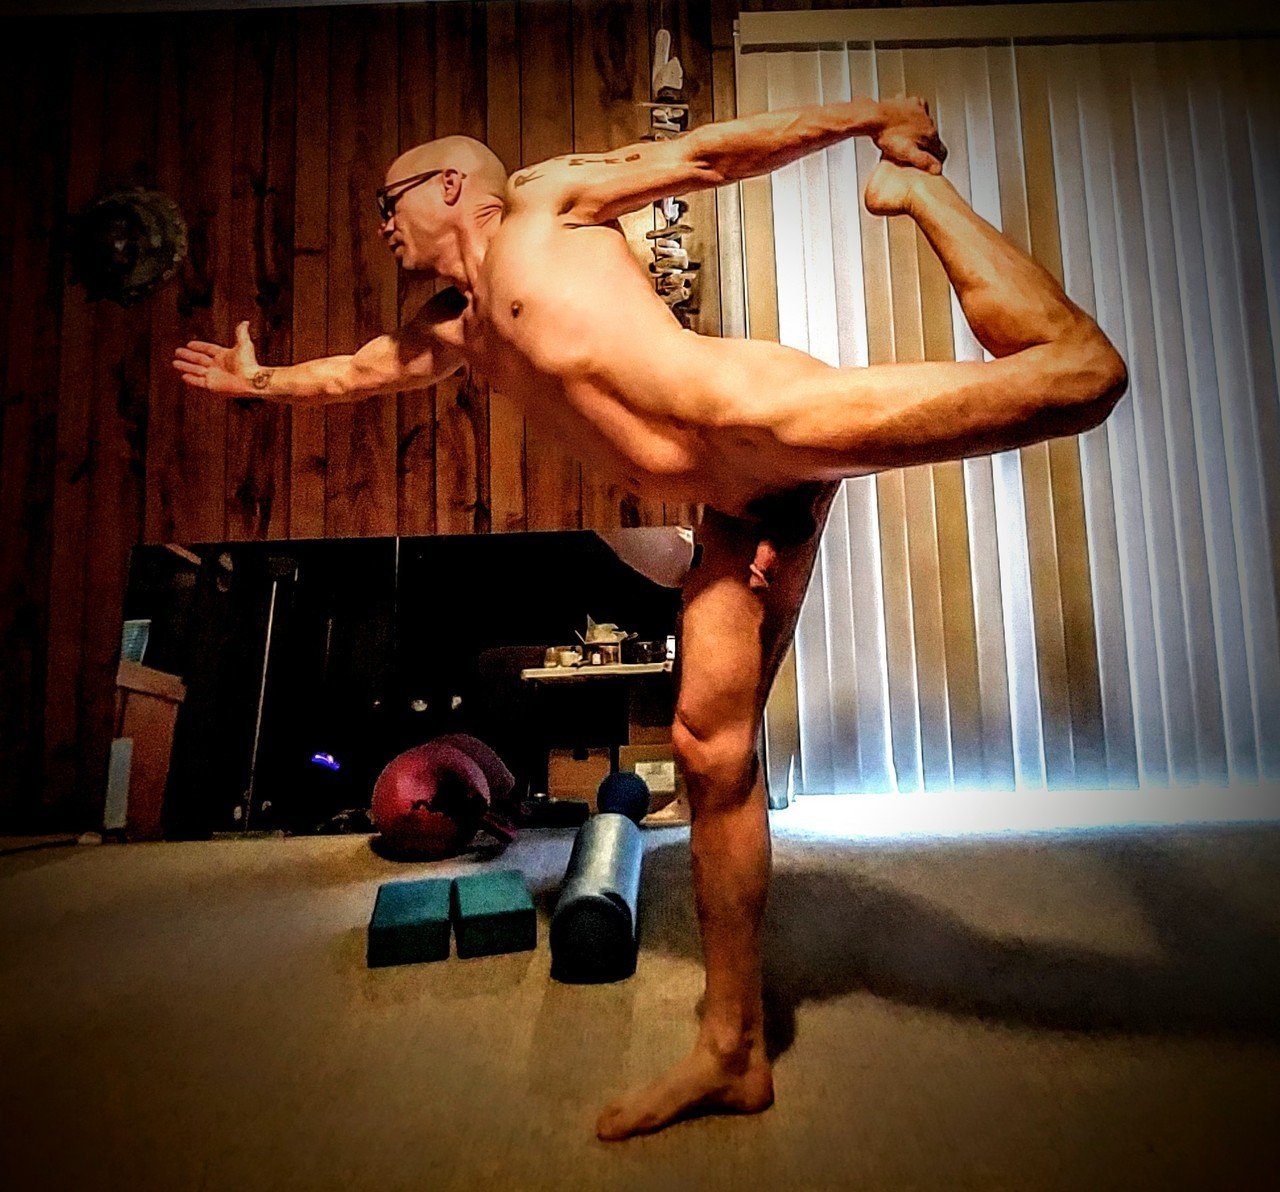 Photo by ArtOfNakedYoga with the username @ArtOfNakedYoga, who is a verified user,  December 20, 2018 at 2:41 AM. The post is about the topic YogaNude and the text says '#yoga #me #nudeyoga #nakedyoga'